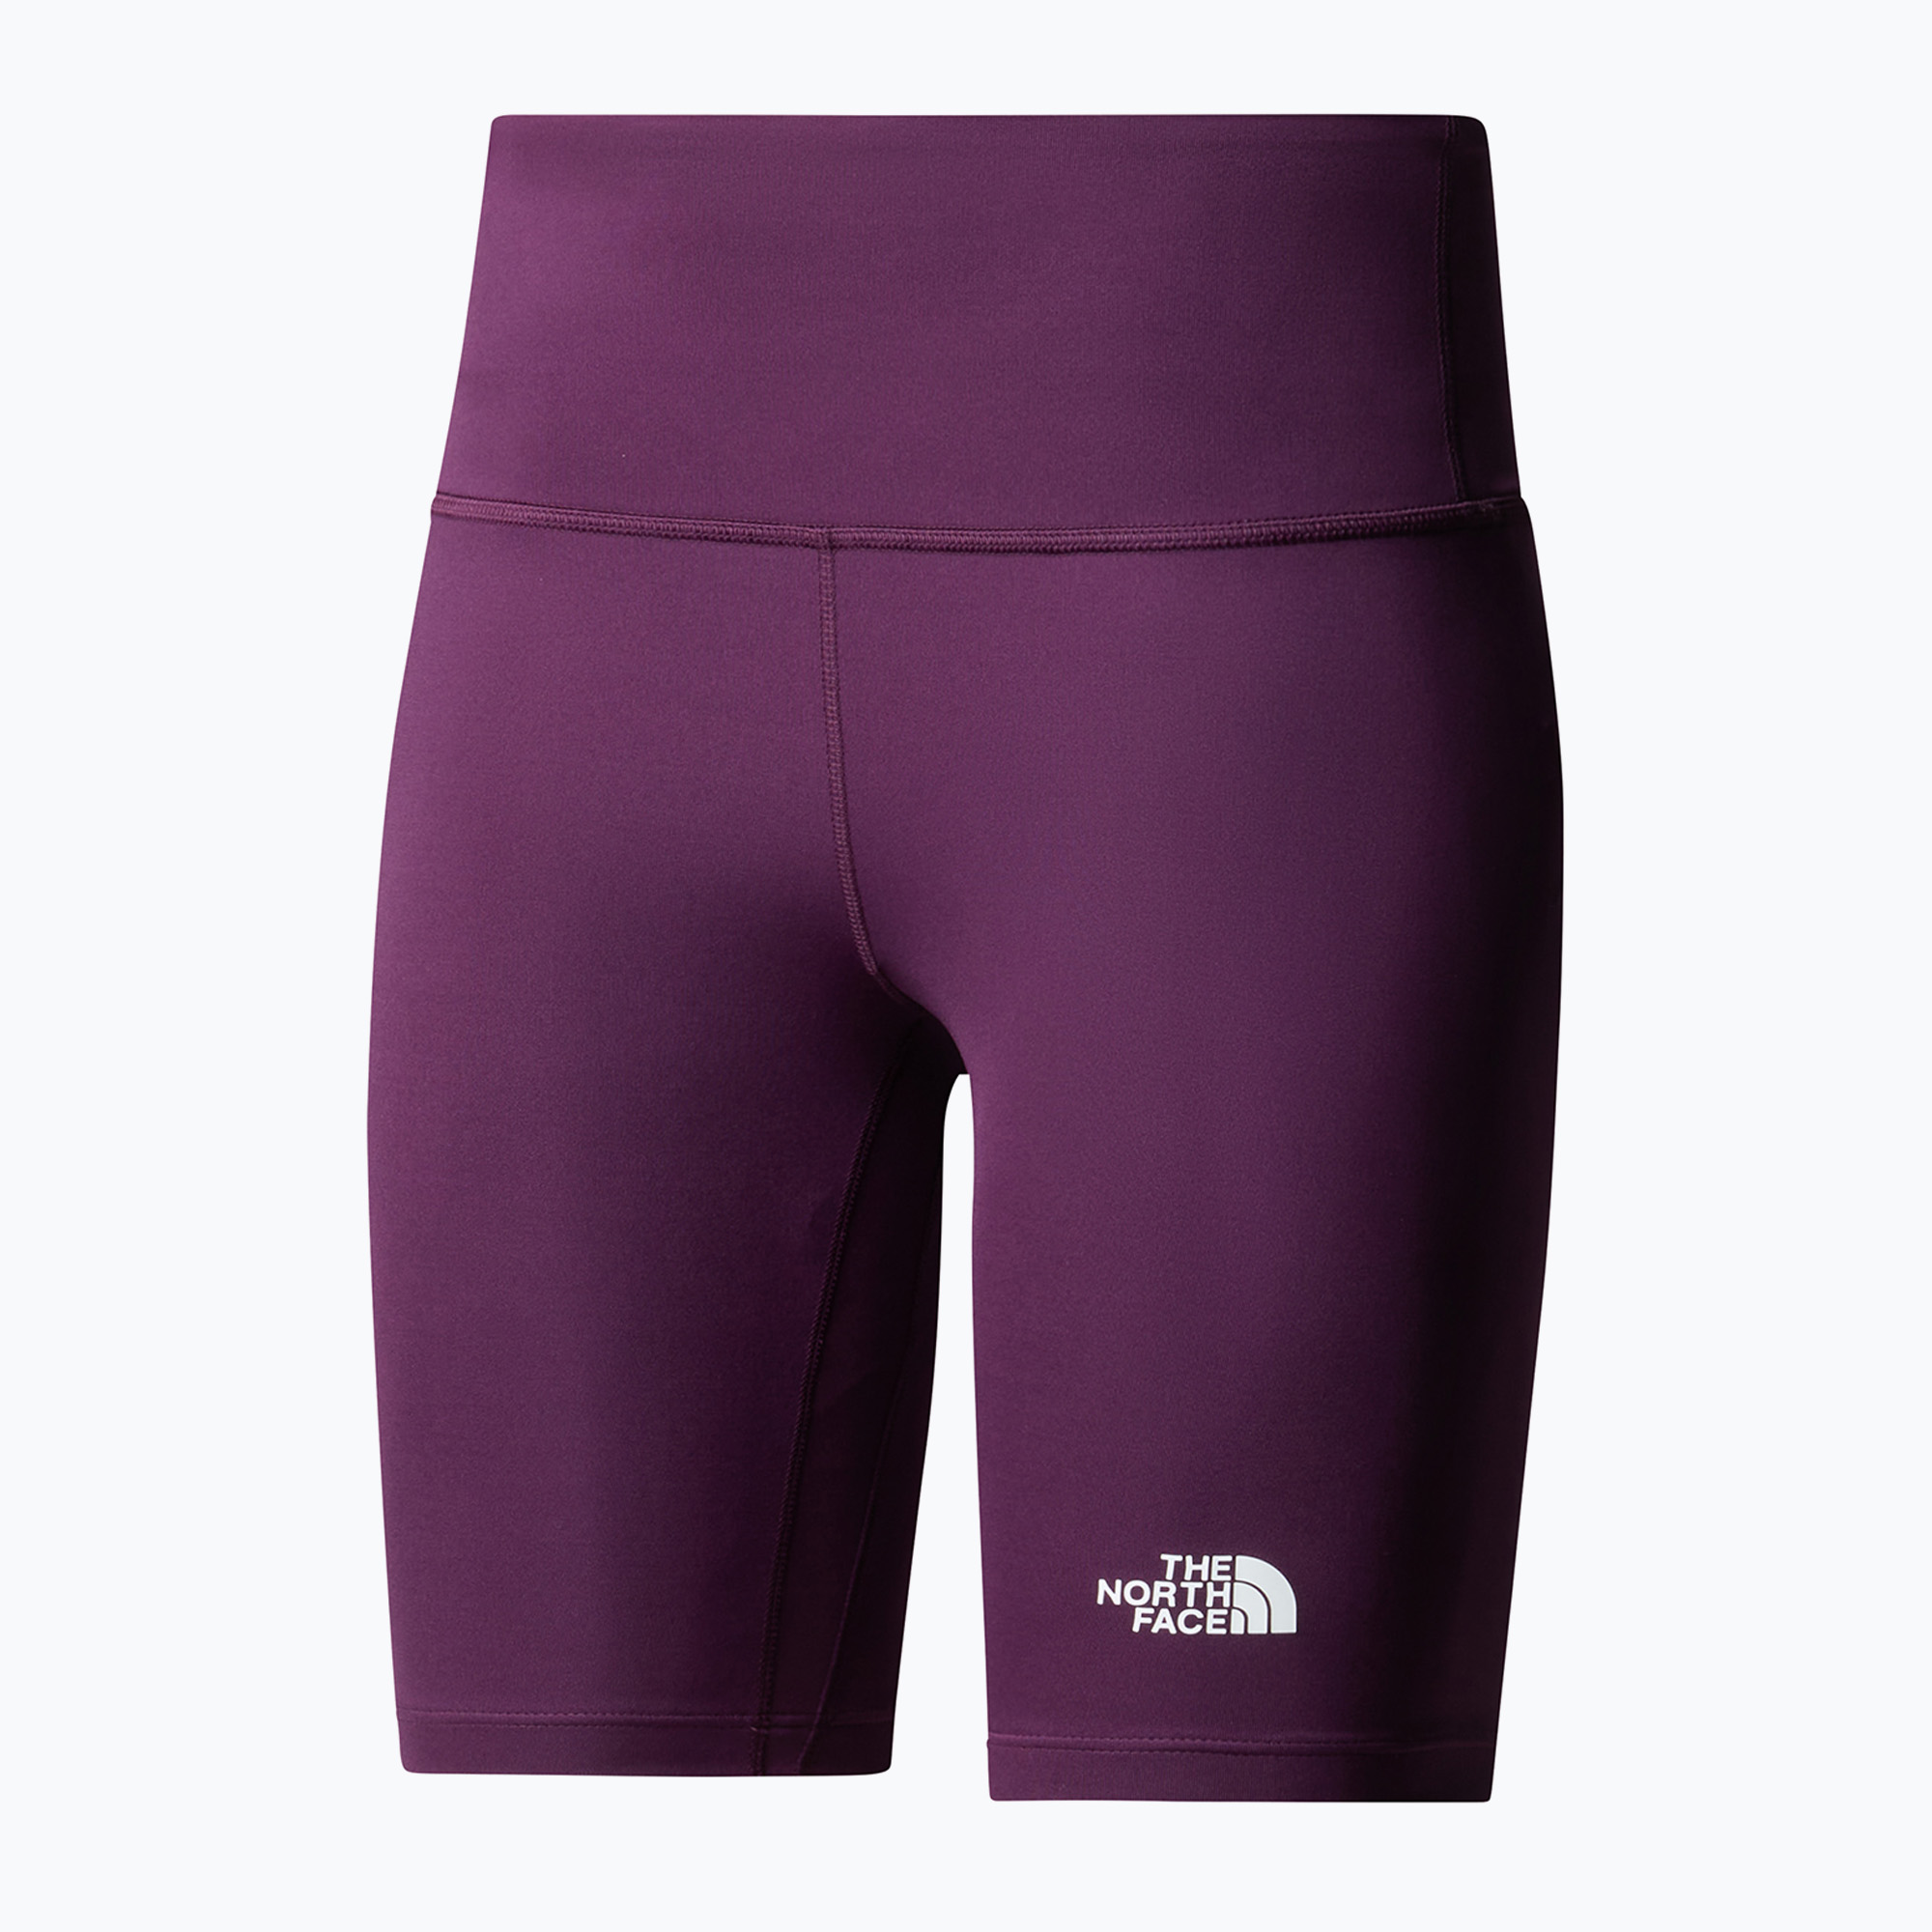 Къси панталони за жени The North Face Flex 8In Tight black currant purple